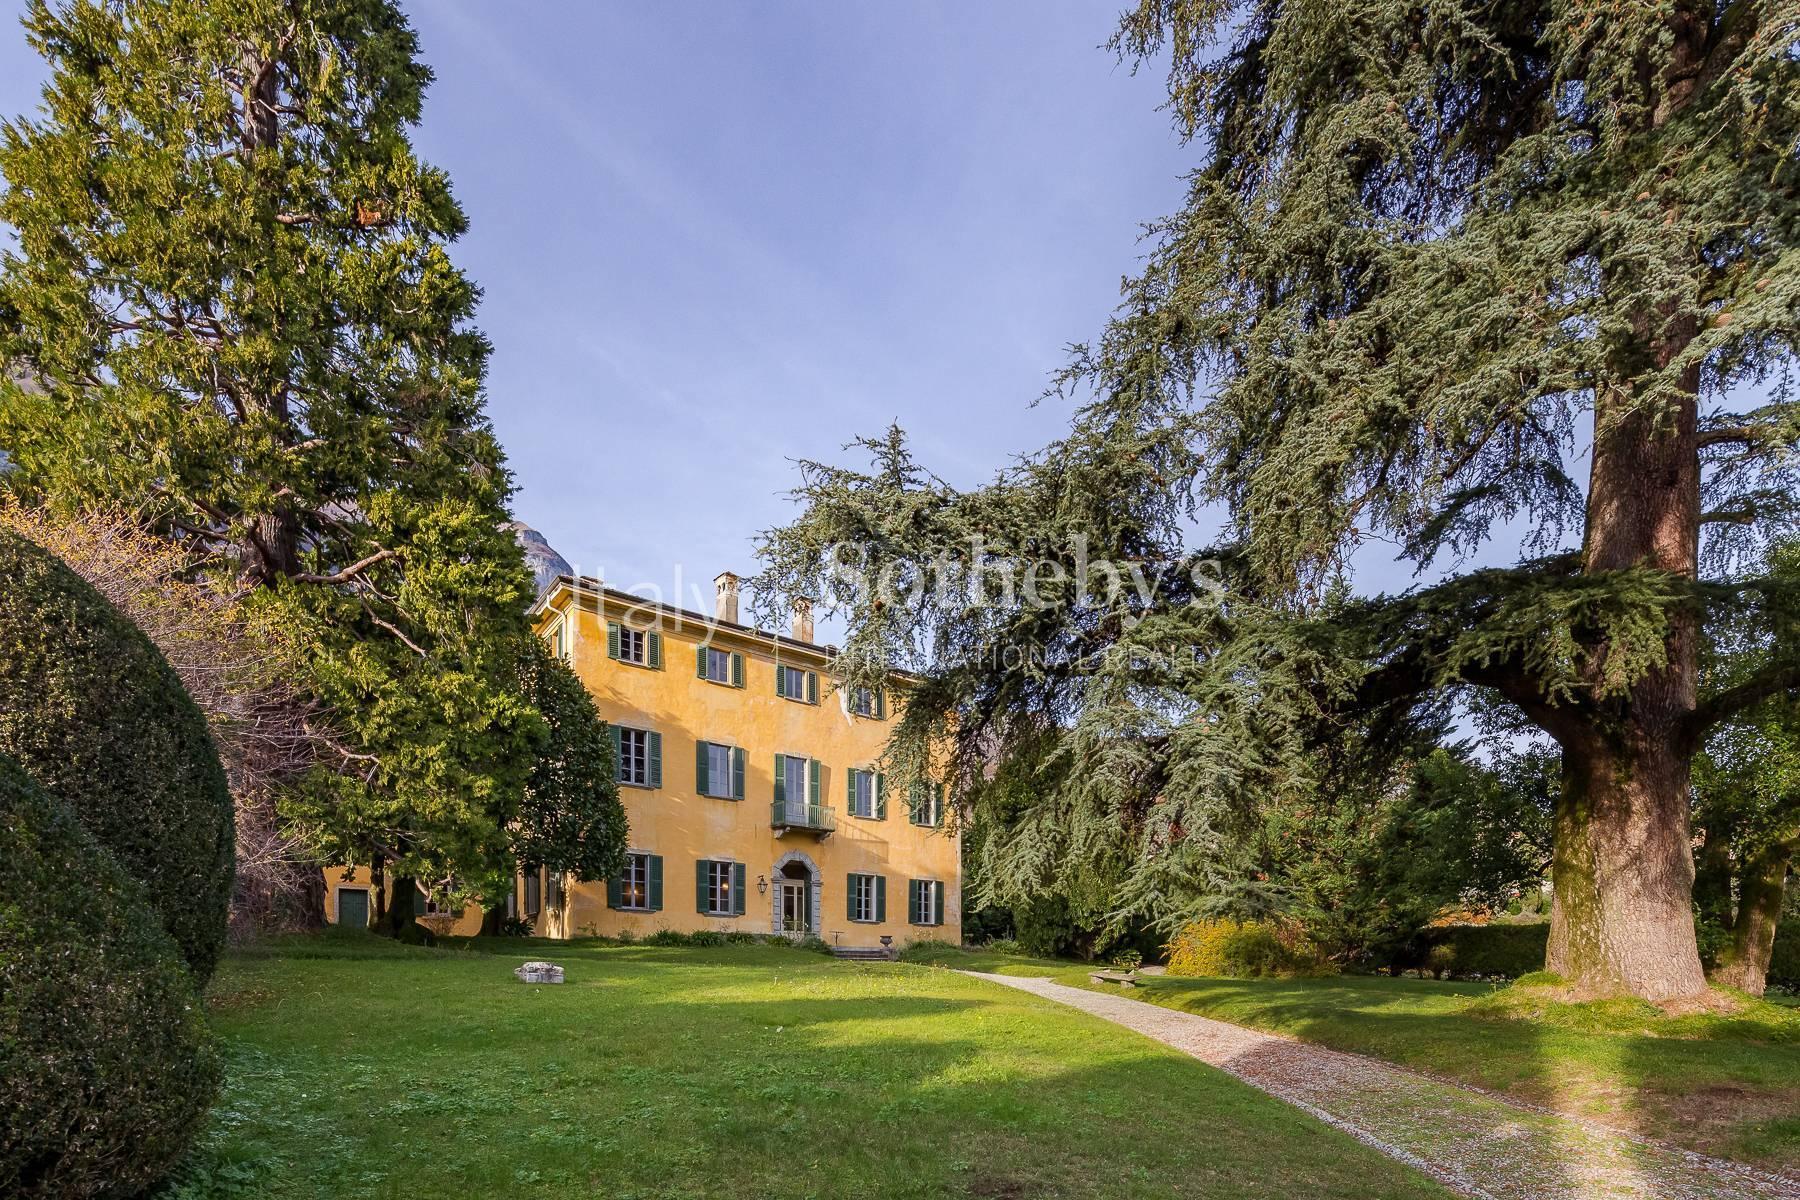 Tremezzina - Outstanding eighteenth-century villa surrounded by greenery - 2